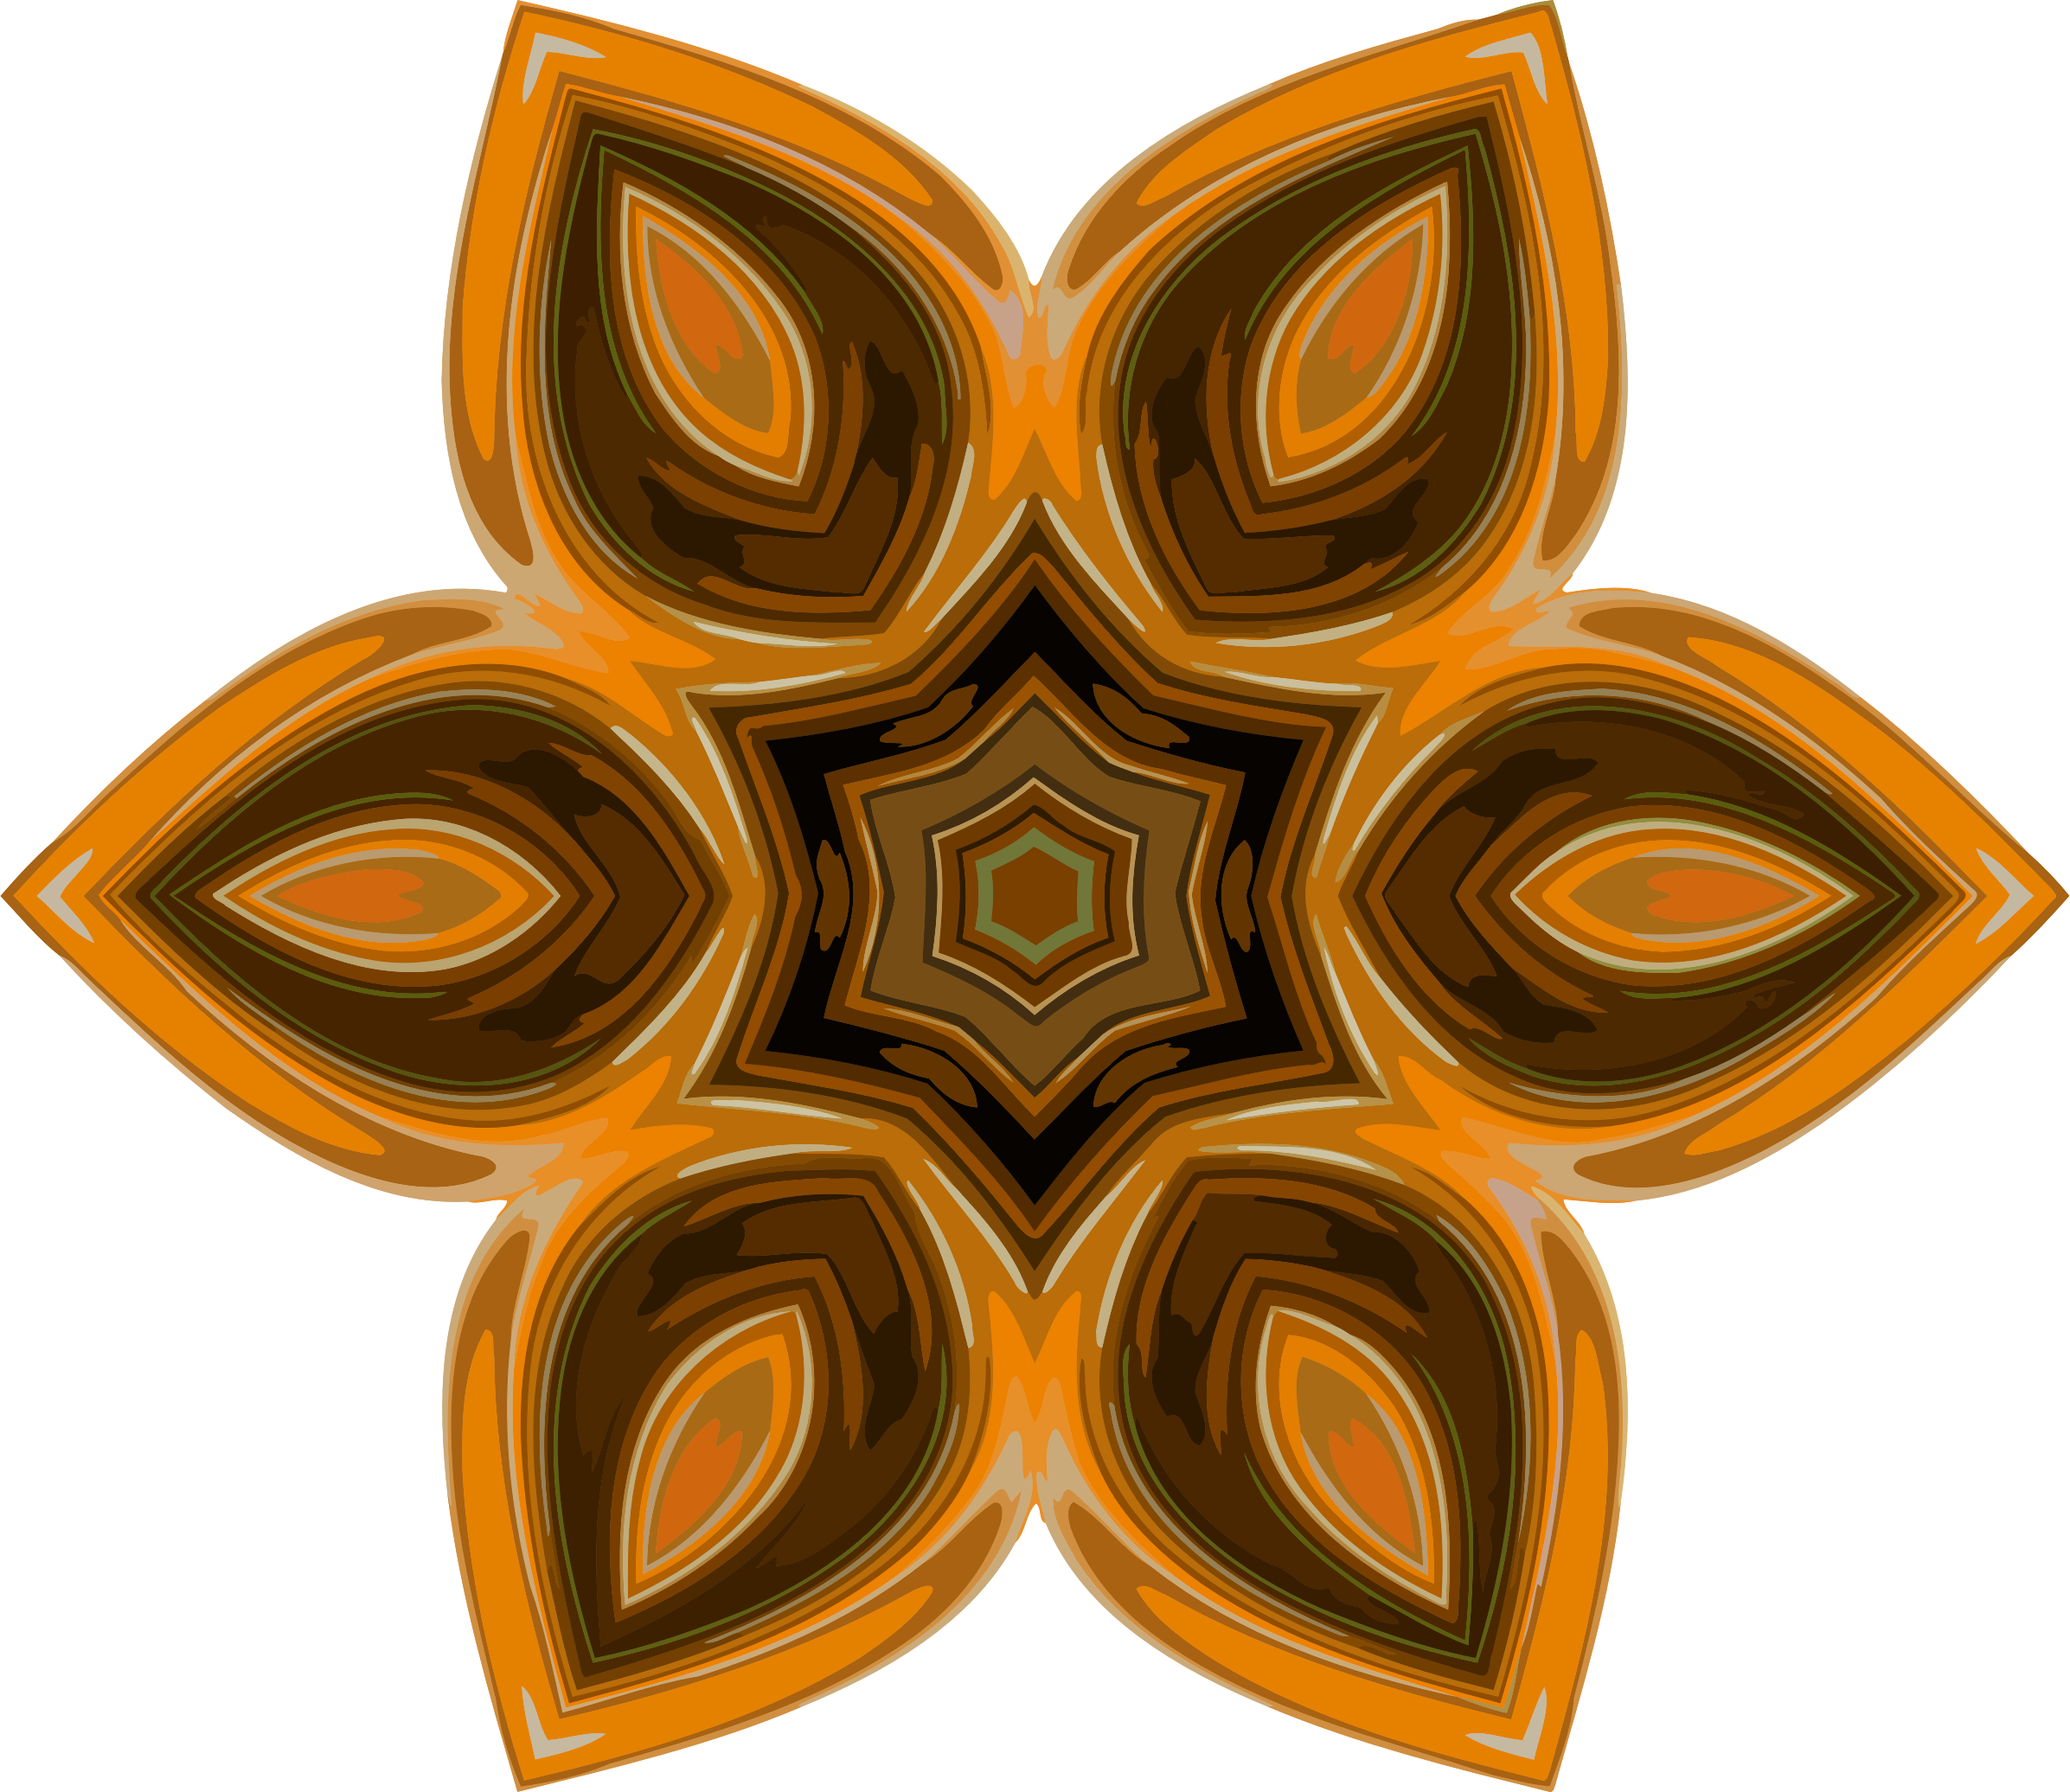 Hexagon clipart orange. Ornament with hexagonal symmetry